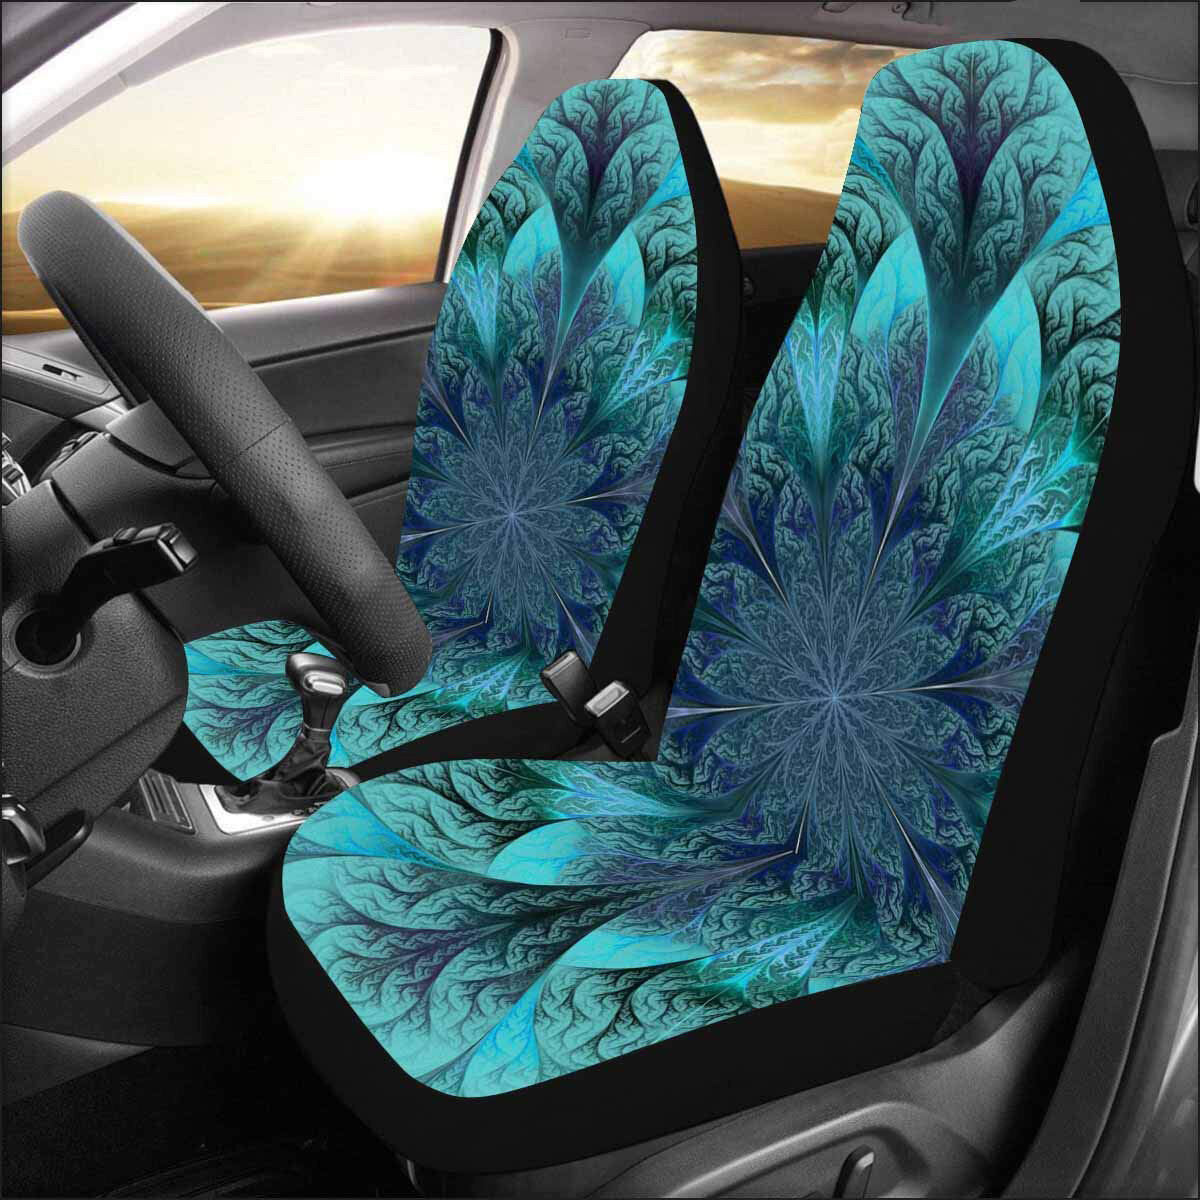 Galaxy Printed Car Front Seat Cover Cushion Protector 2 Pcs